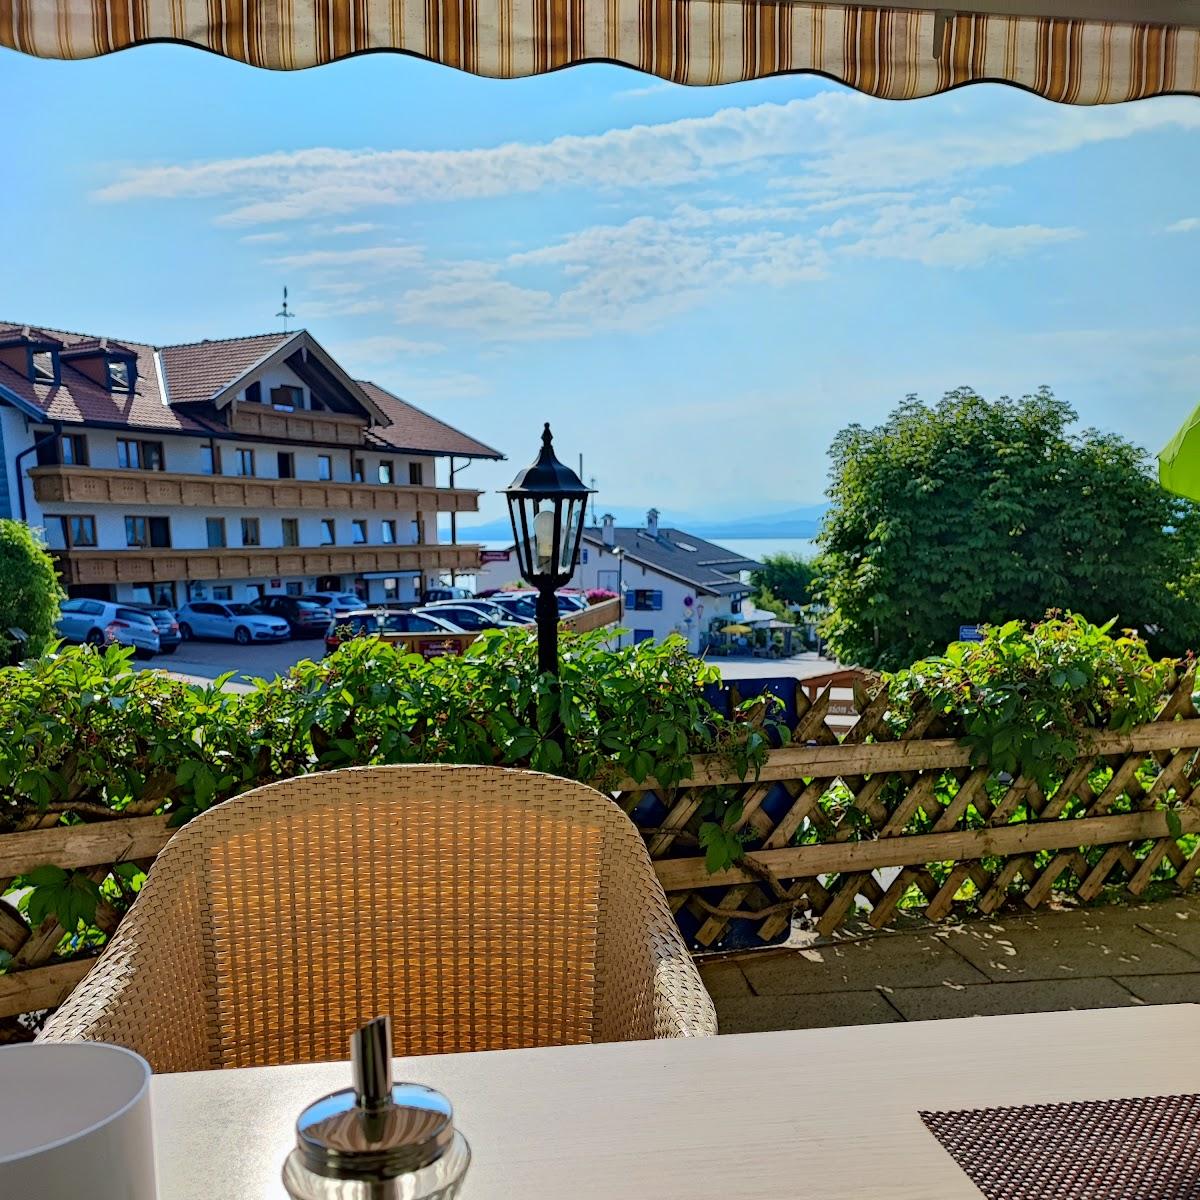 Restaurant "Pension Seeblick" in Gstadt am Chiemsee